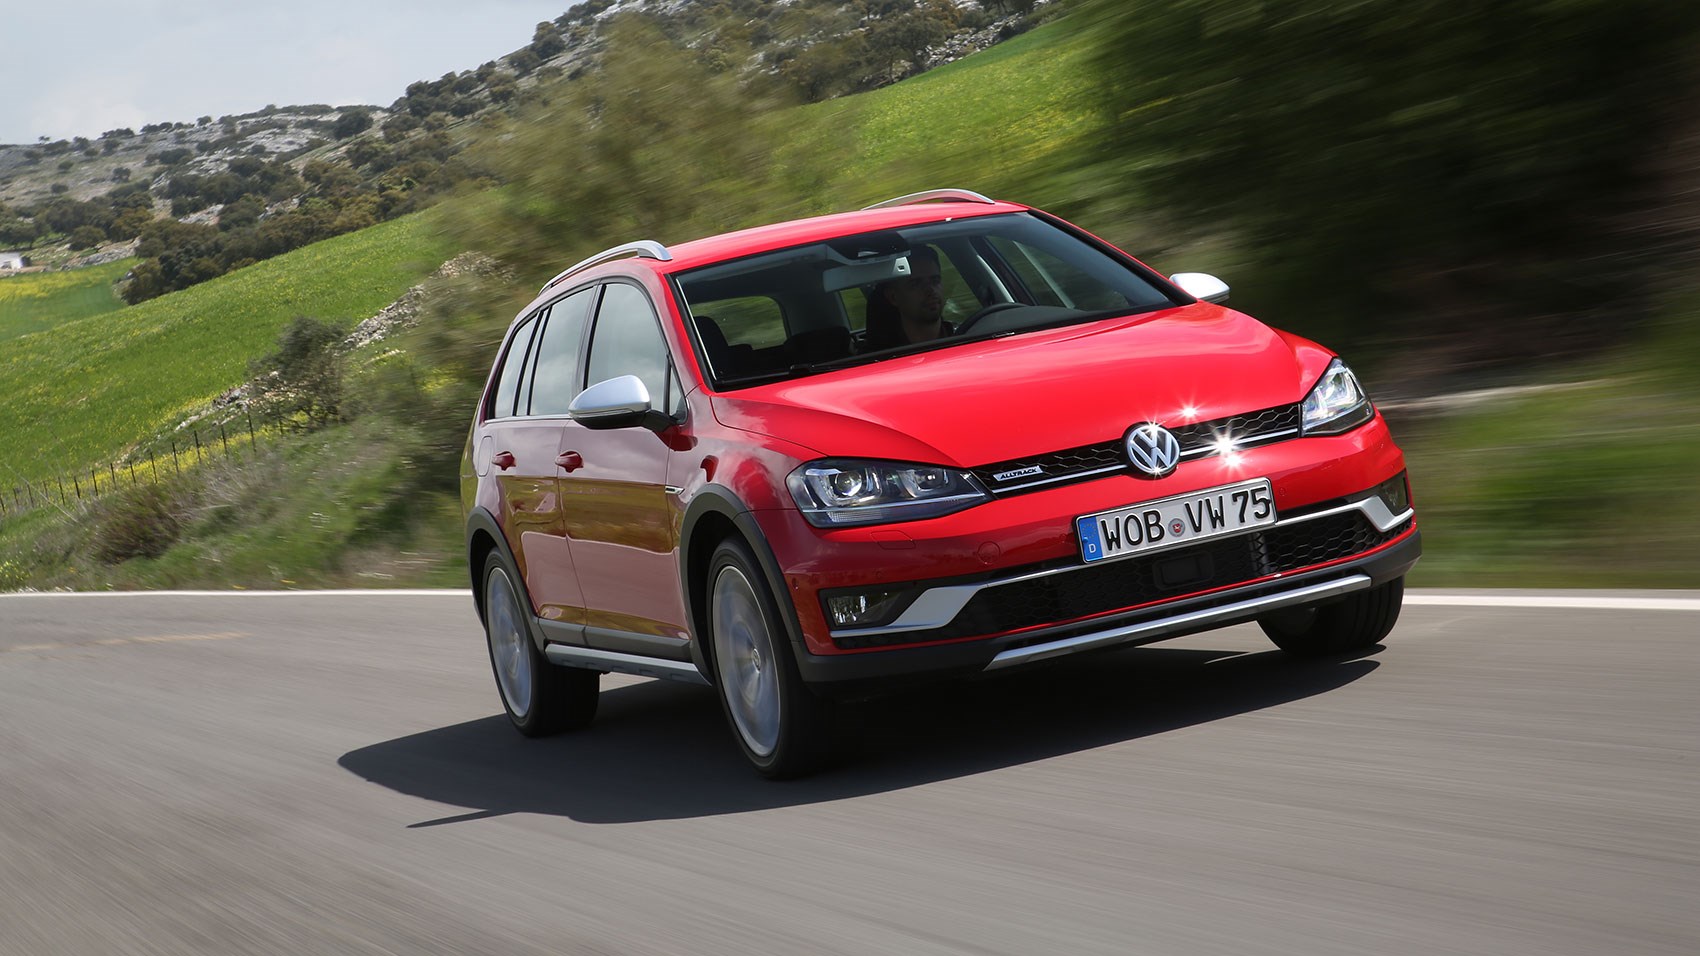 VW Golf 2.0 DSG review | CAR